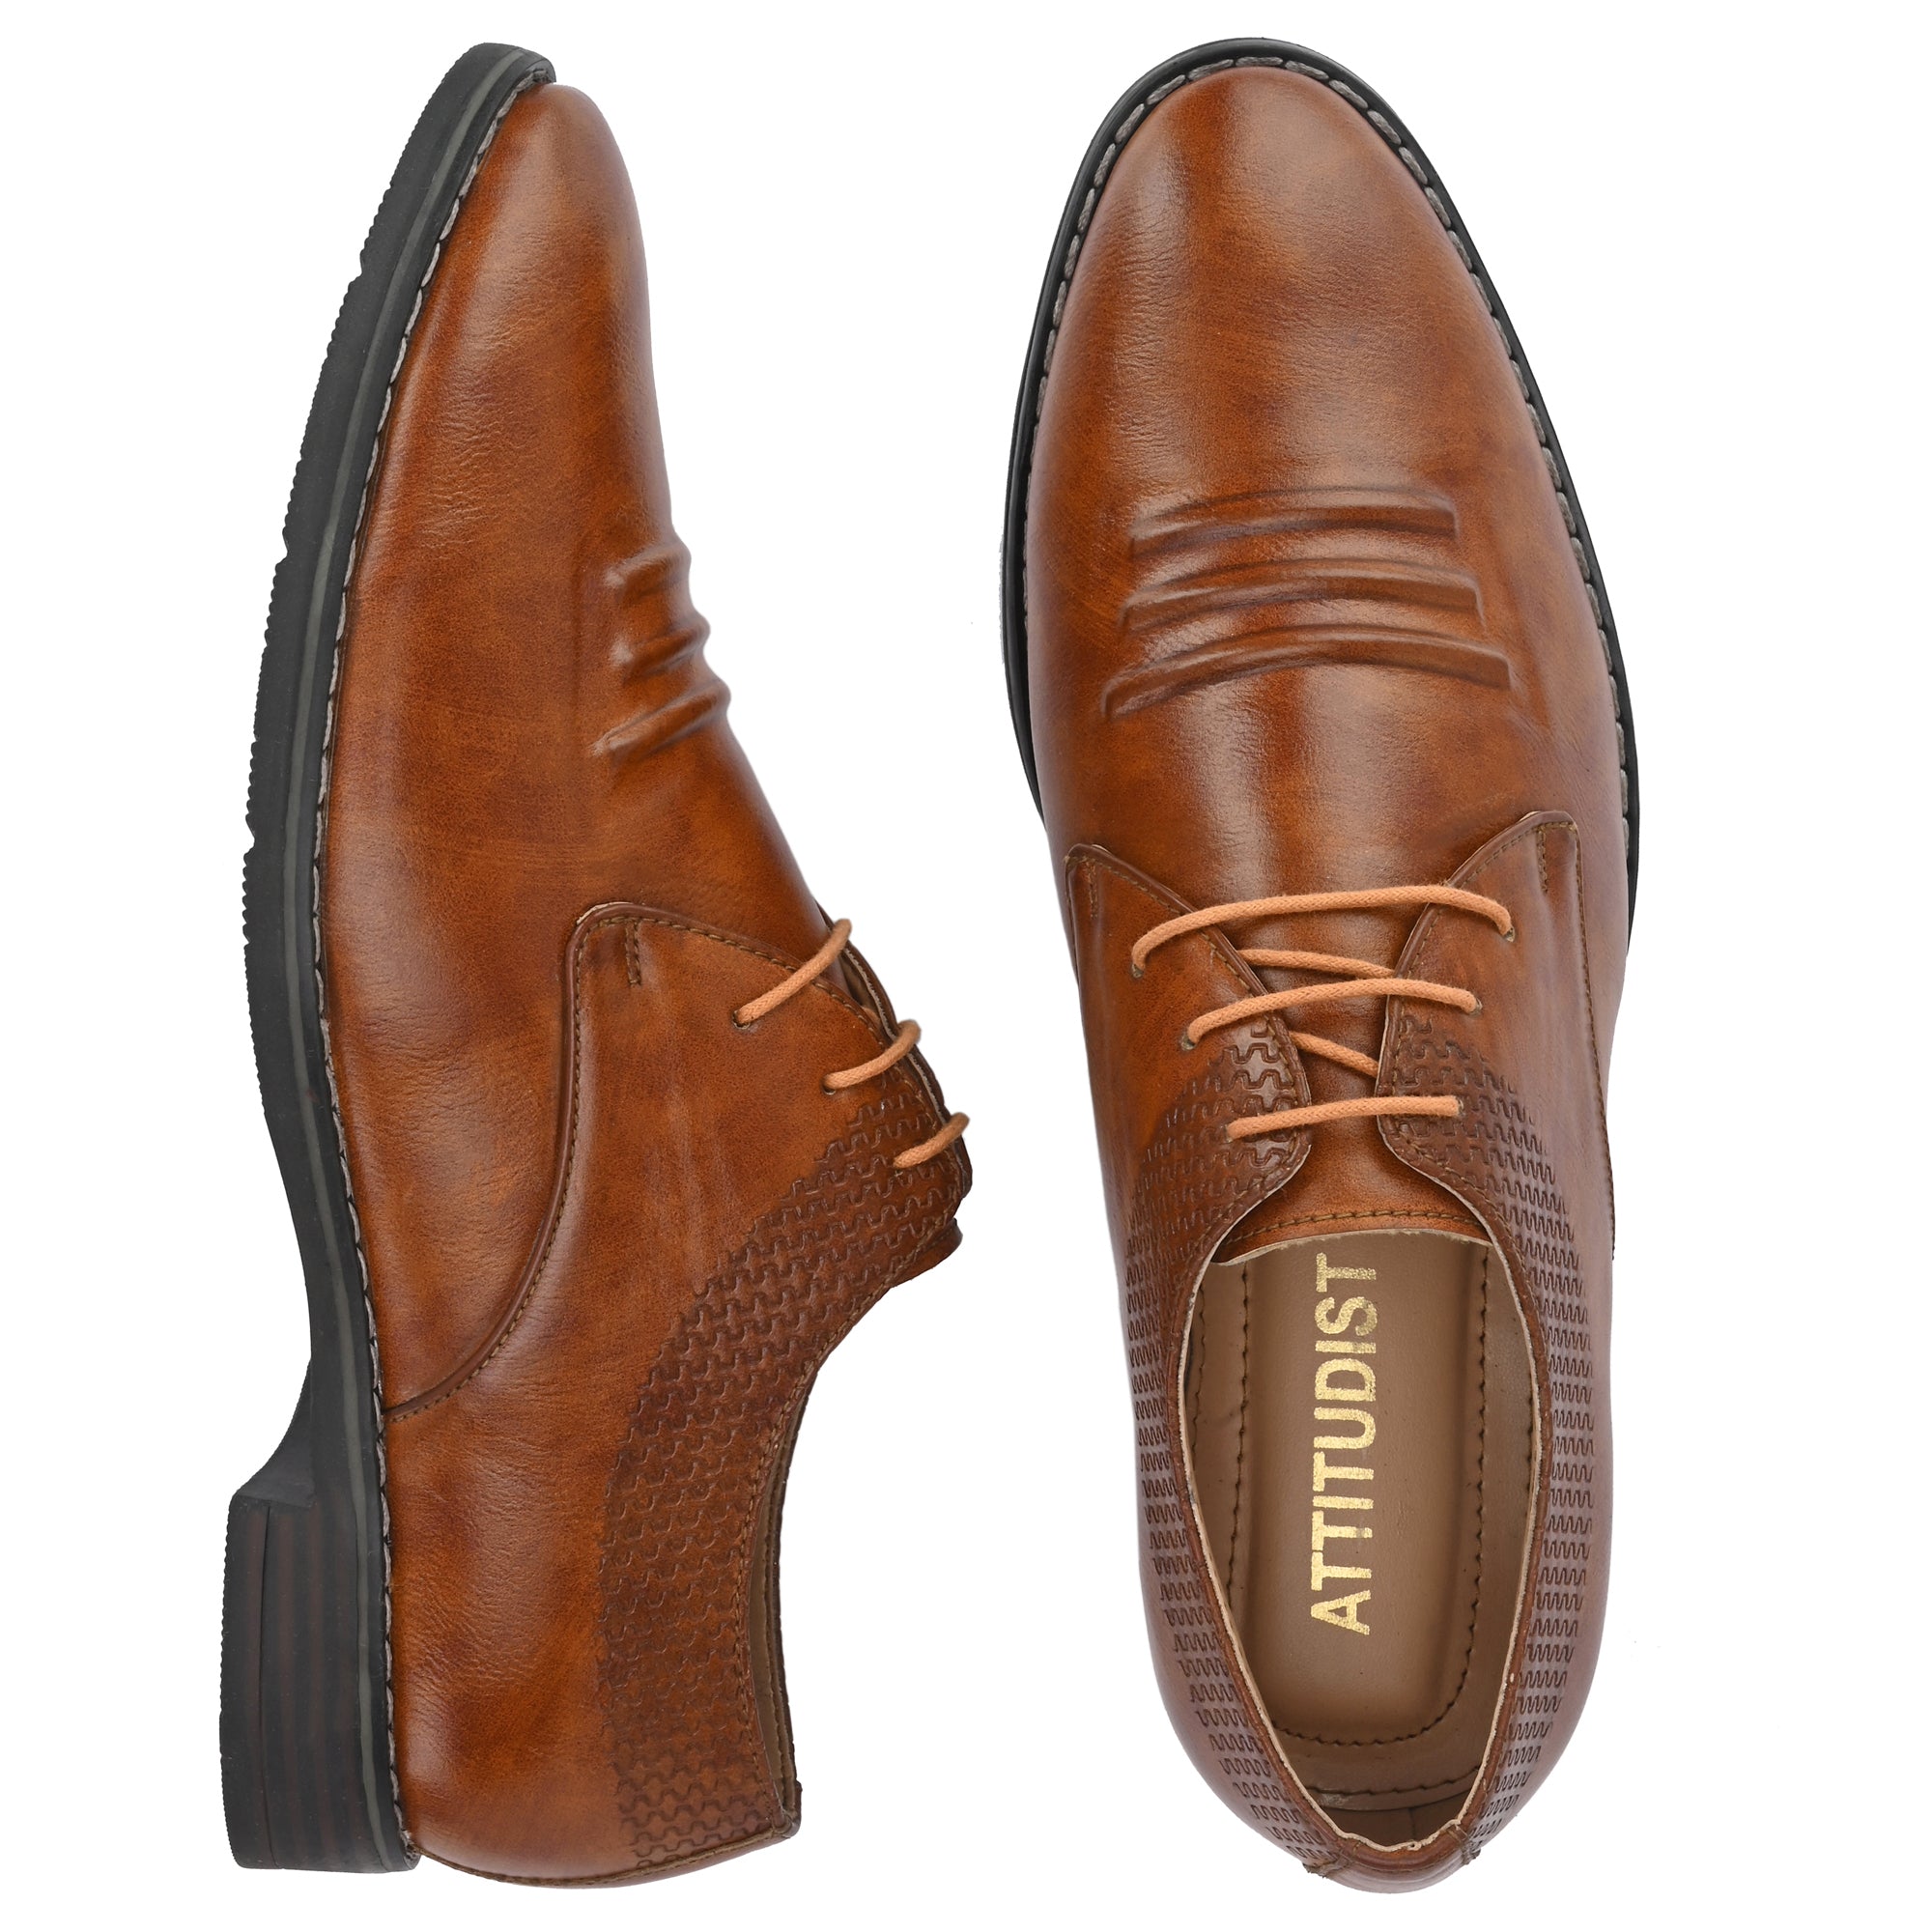 formal-lace-up-attitudist-shoes-for-men-with-design-3703tan\